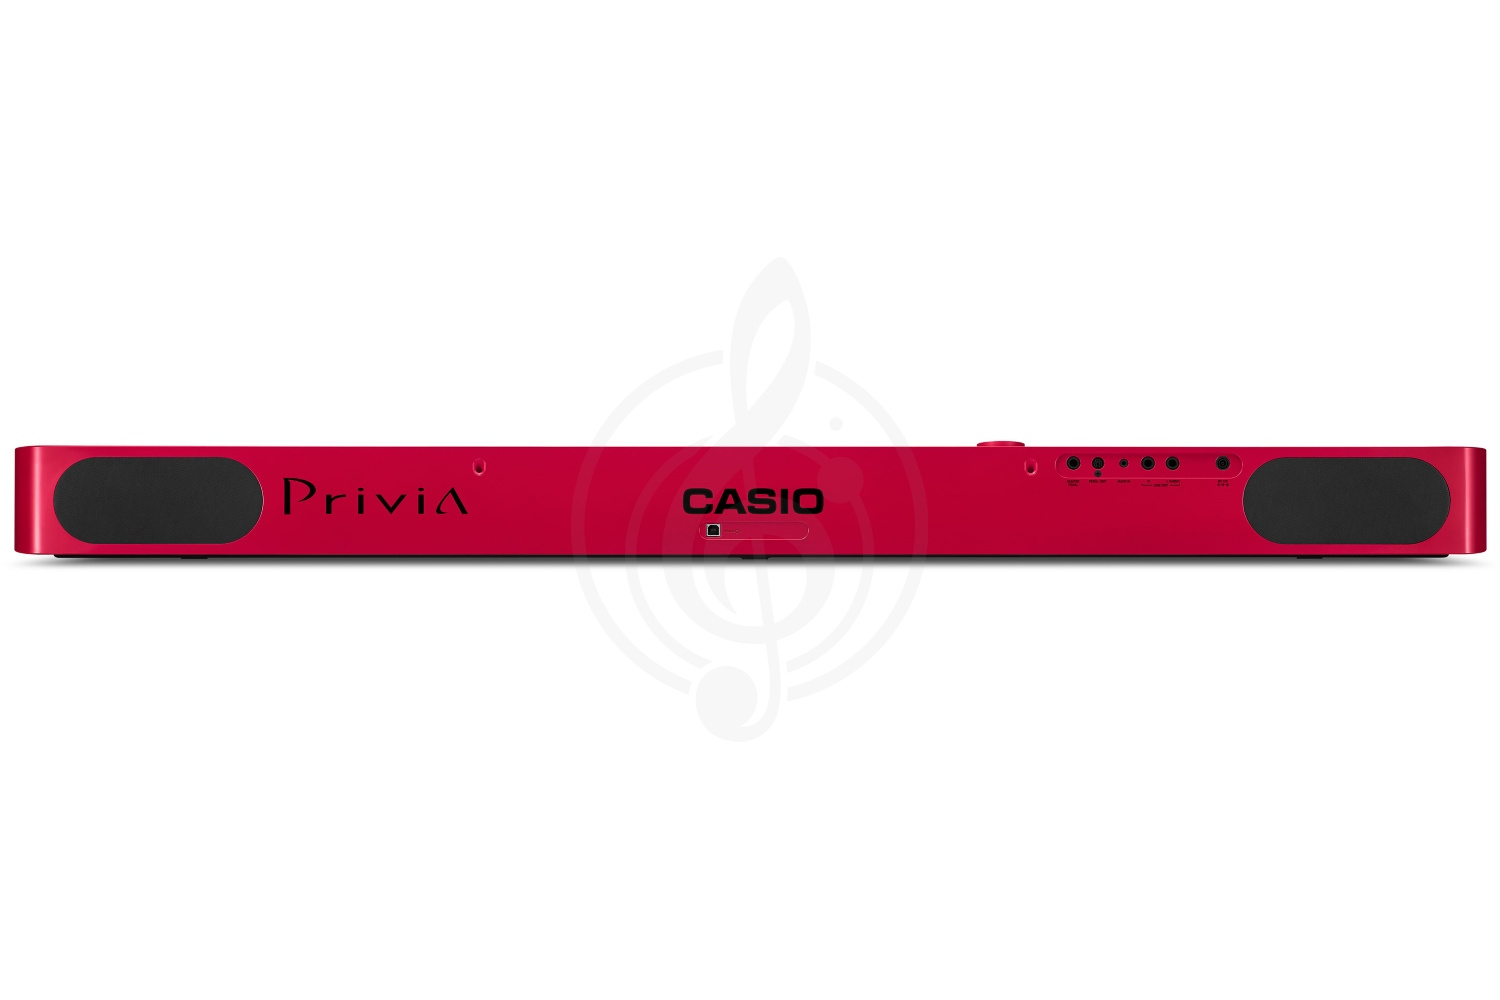 изображение Casio Privia PX-S1000RD - 3